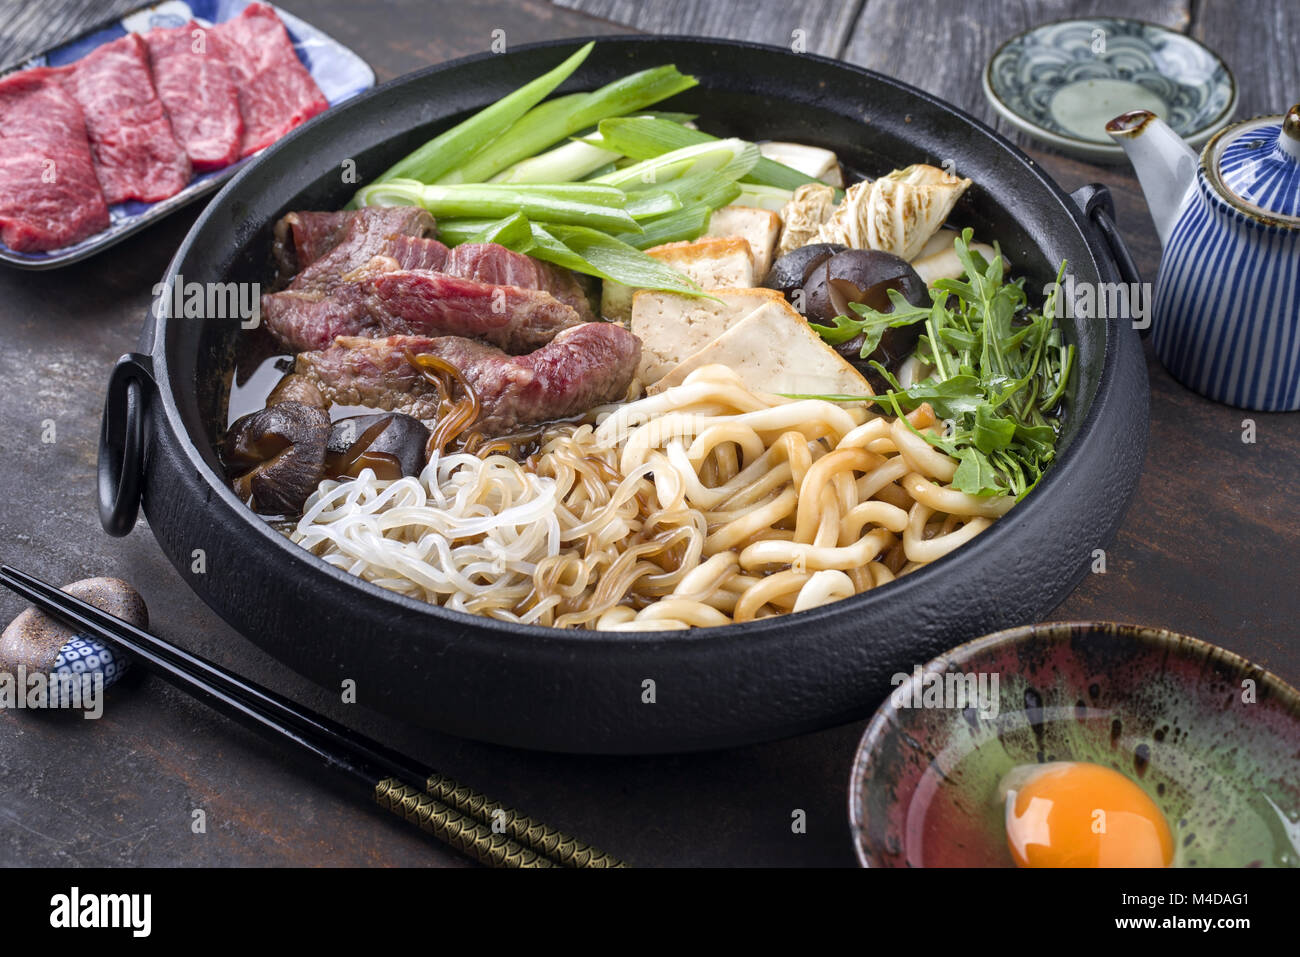 https://c8.alamy.com/comp/M4DAG1/japanese-sukiyaki-in-traditional-cast-iron-pot-M4DAG1.jpg